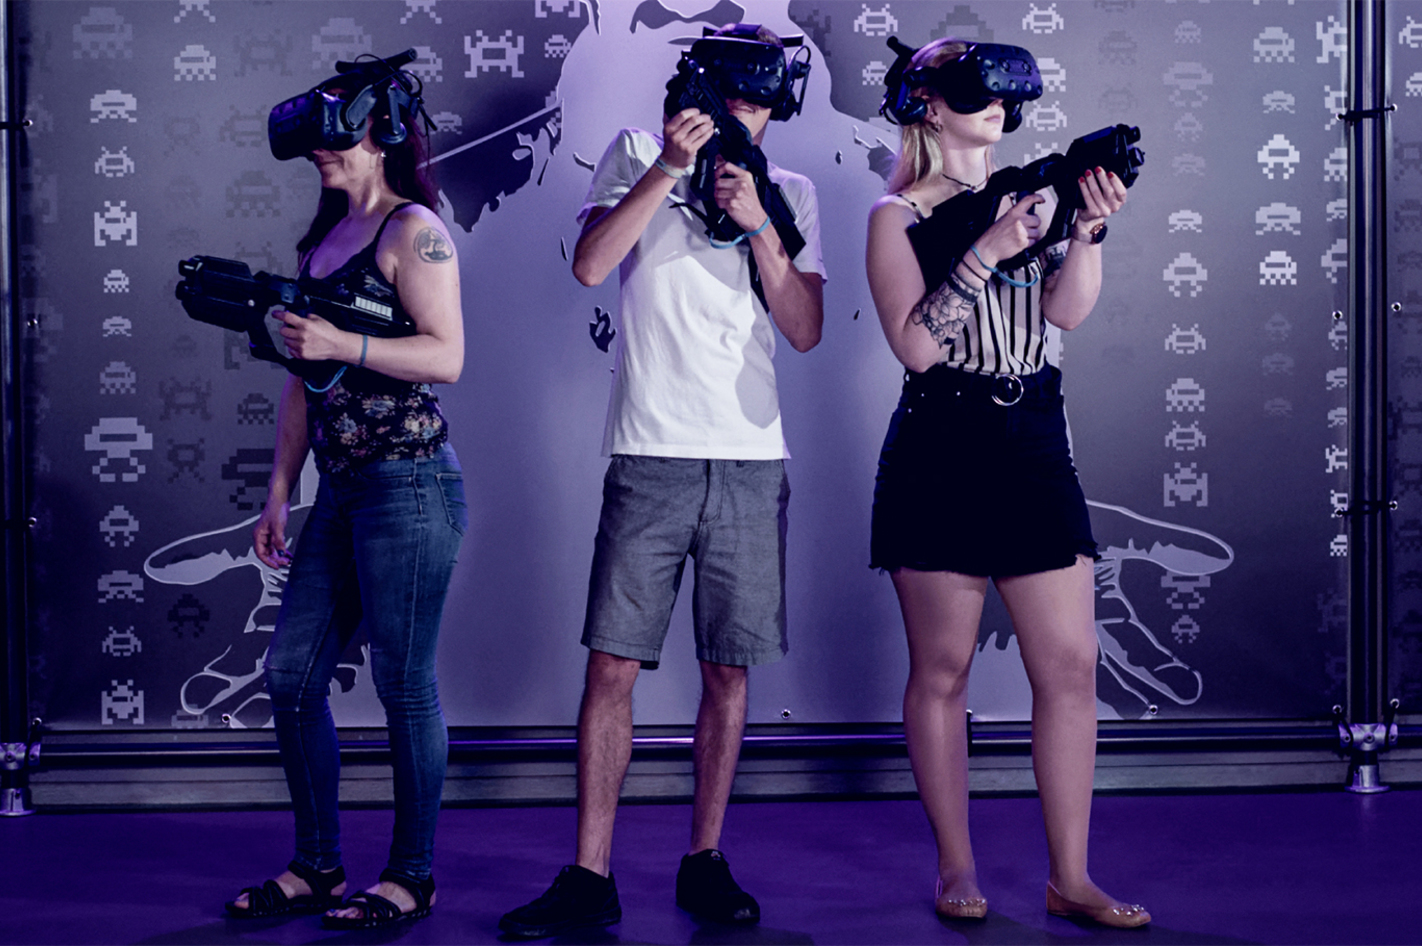 VR Gaming Dresden